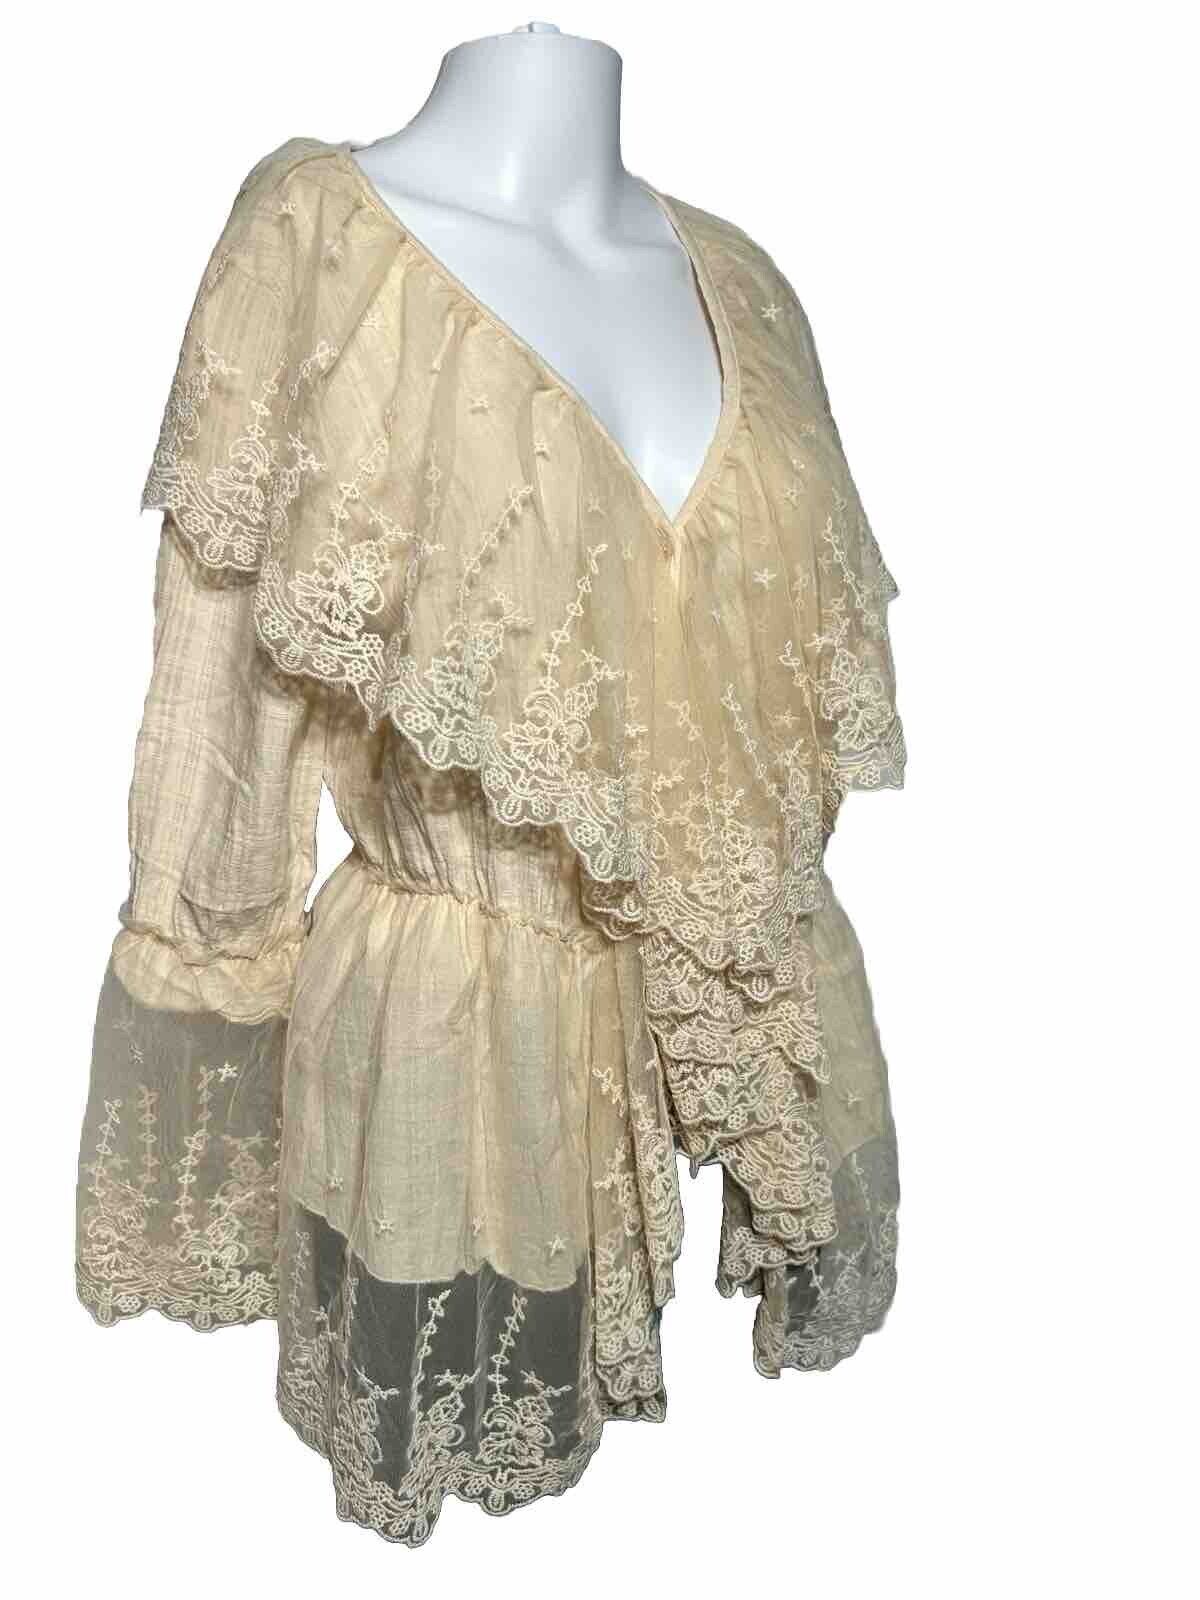 Indigo Thread Co Lace Sheer Lacy Ruffle Top Size SMALL Victorian Bohemian Blouse